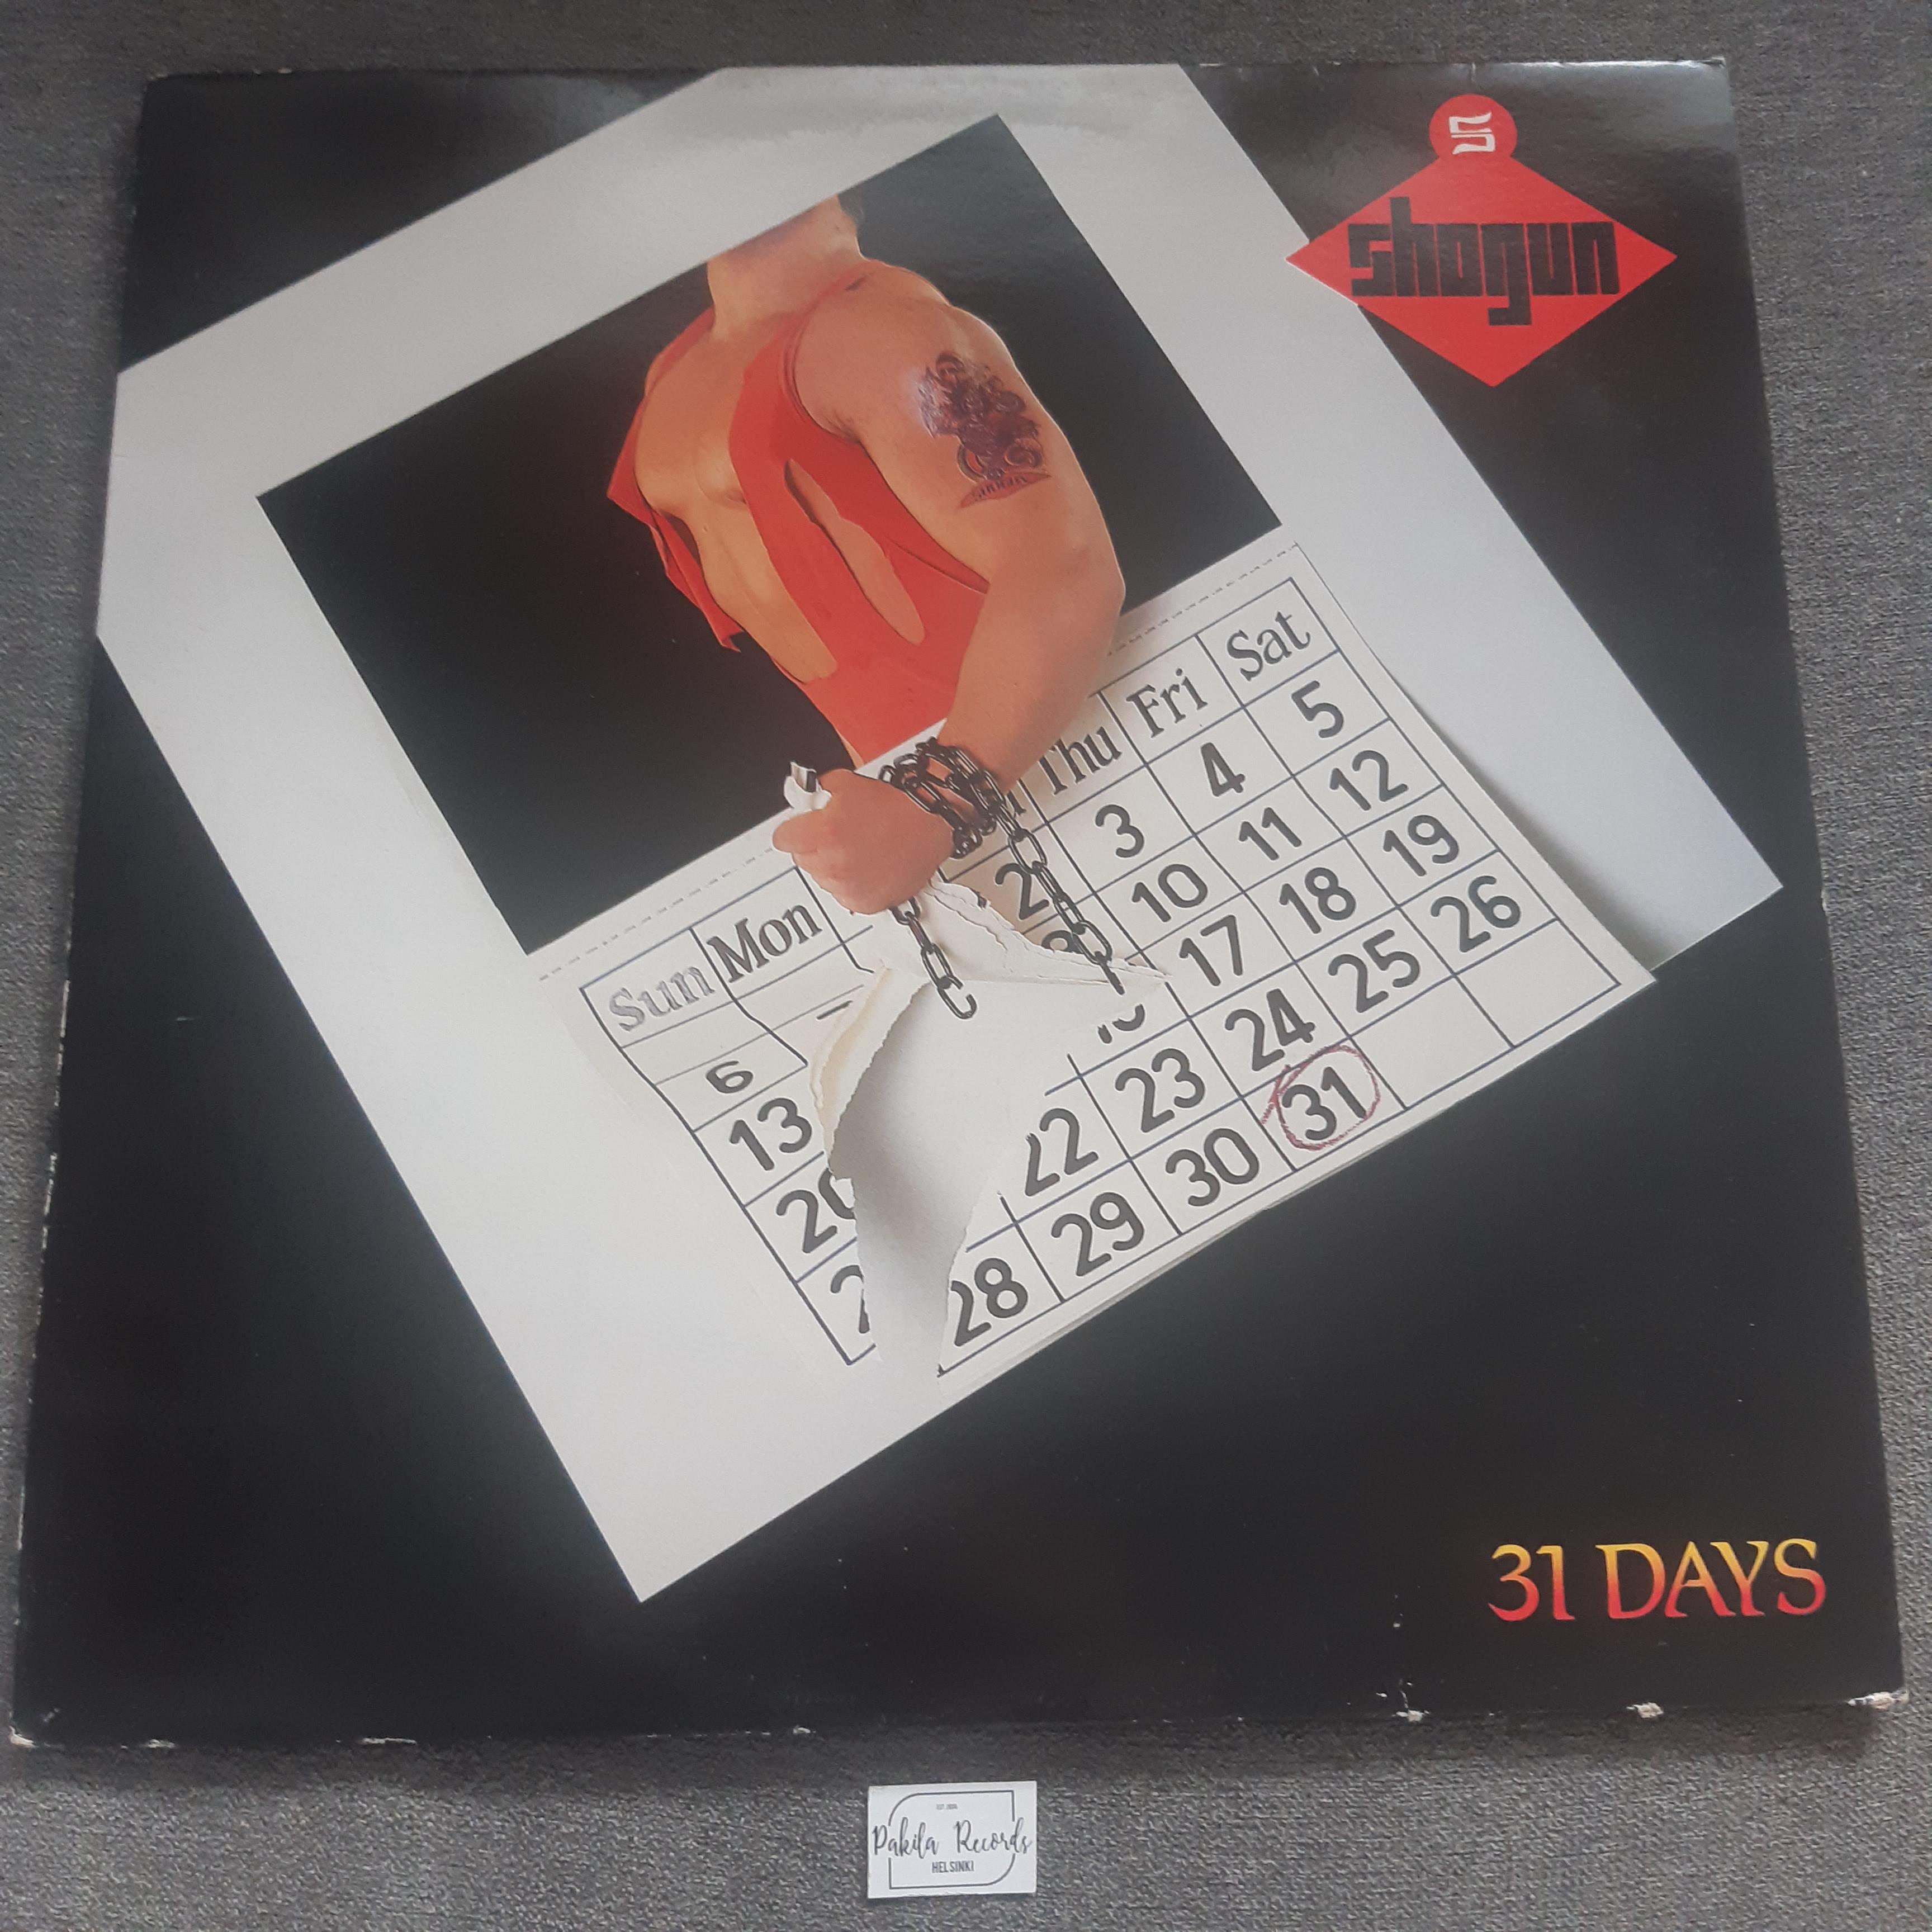 Shogun - 31 Days - LP (käytetty)